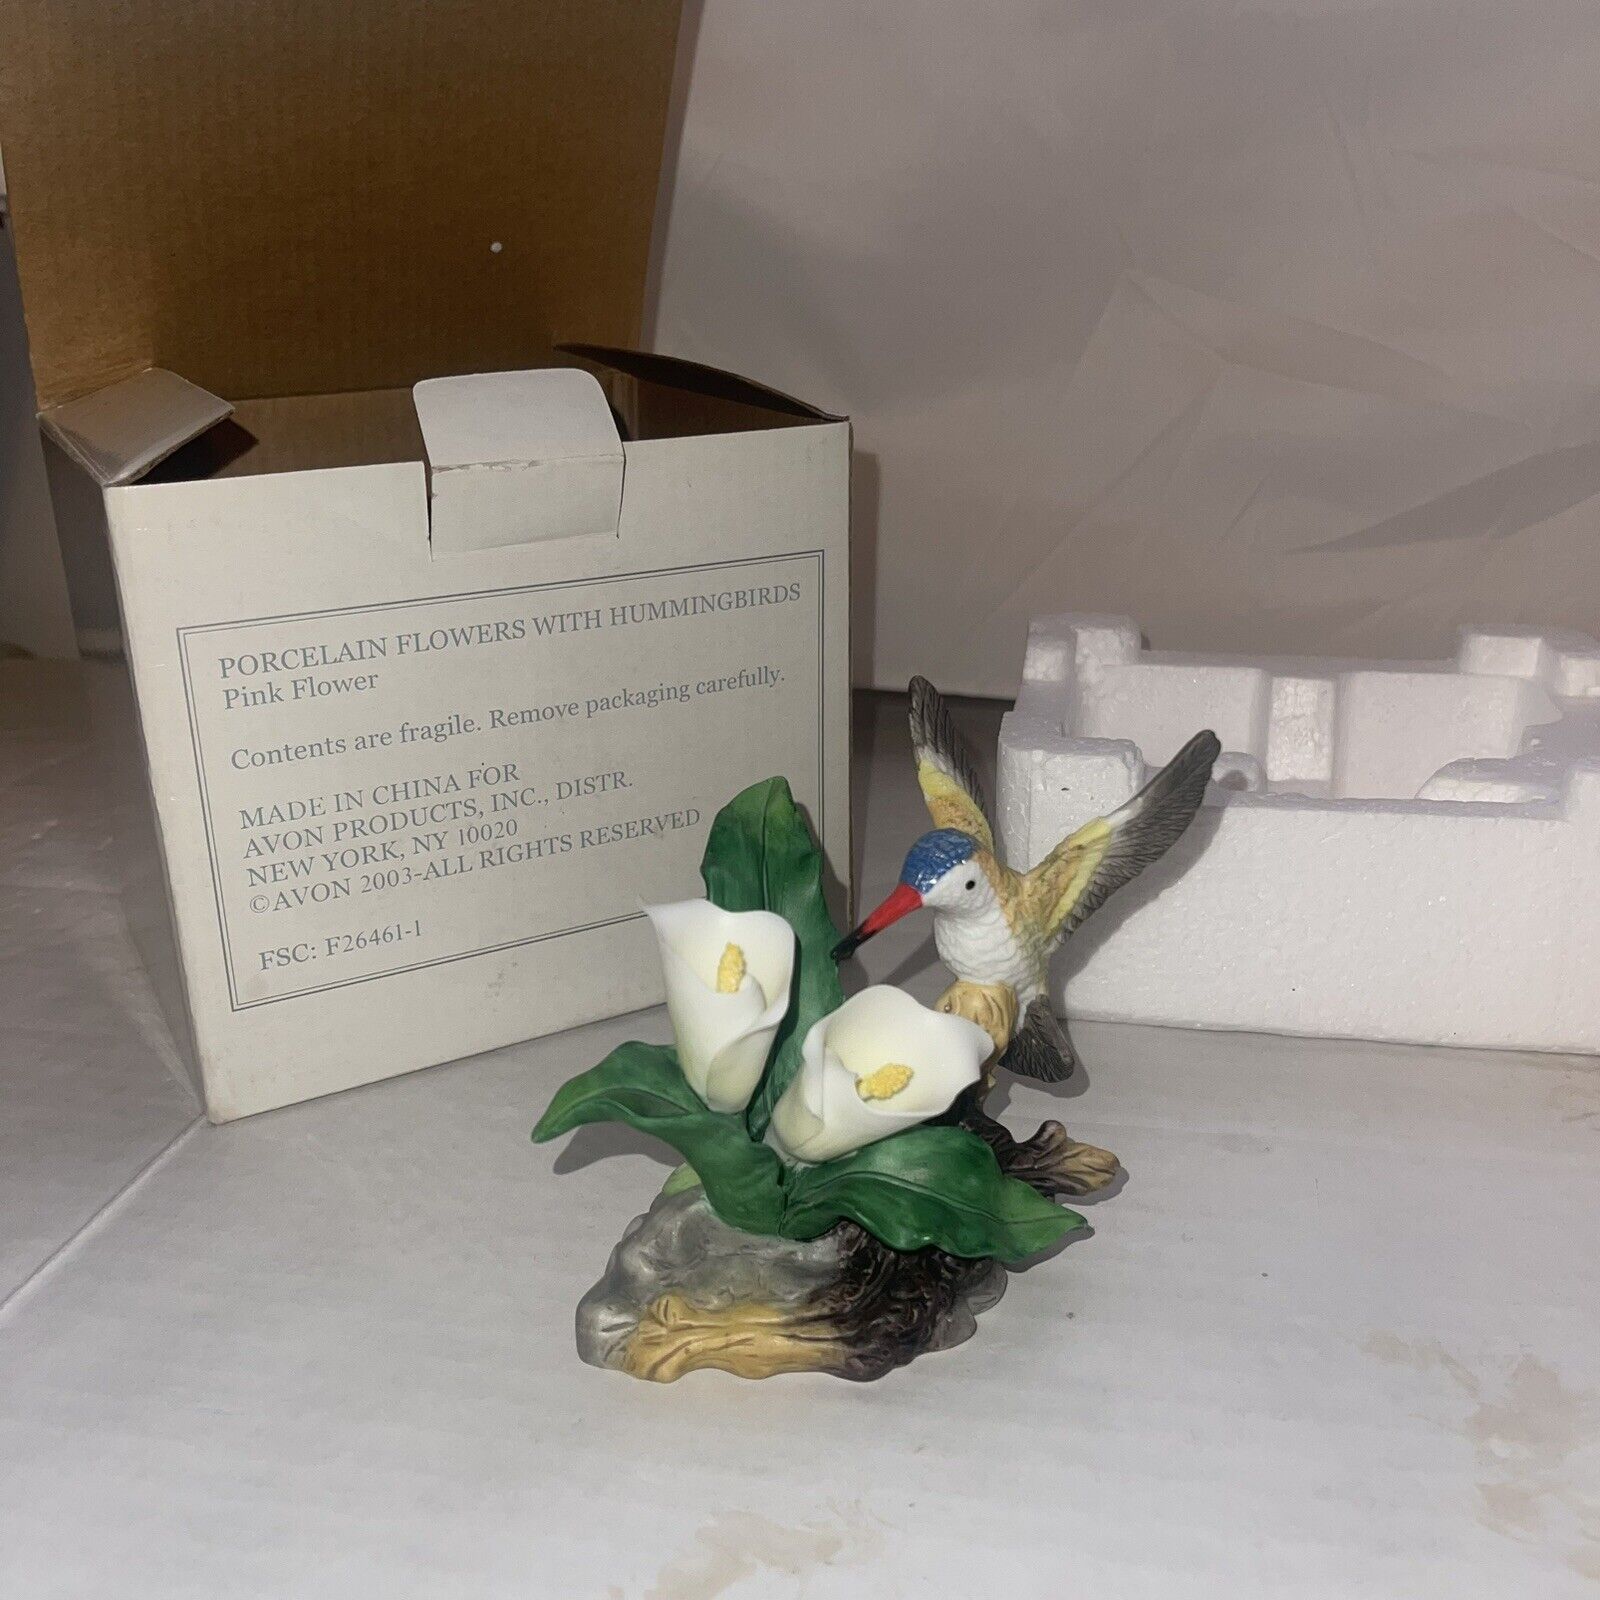 Vintage Avon Porcelain Hummingbird Figurine on Limb wih White Flowers 2003 